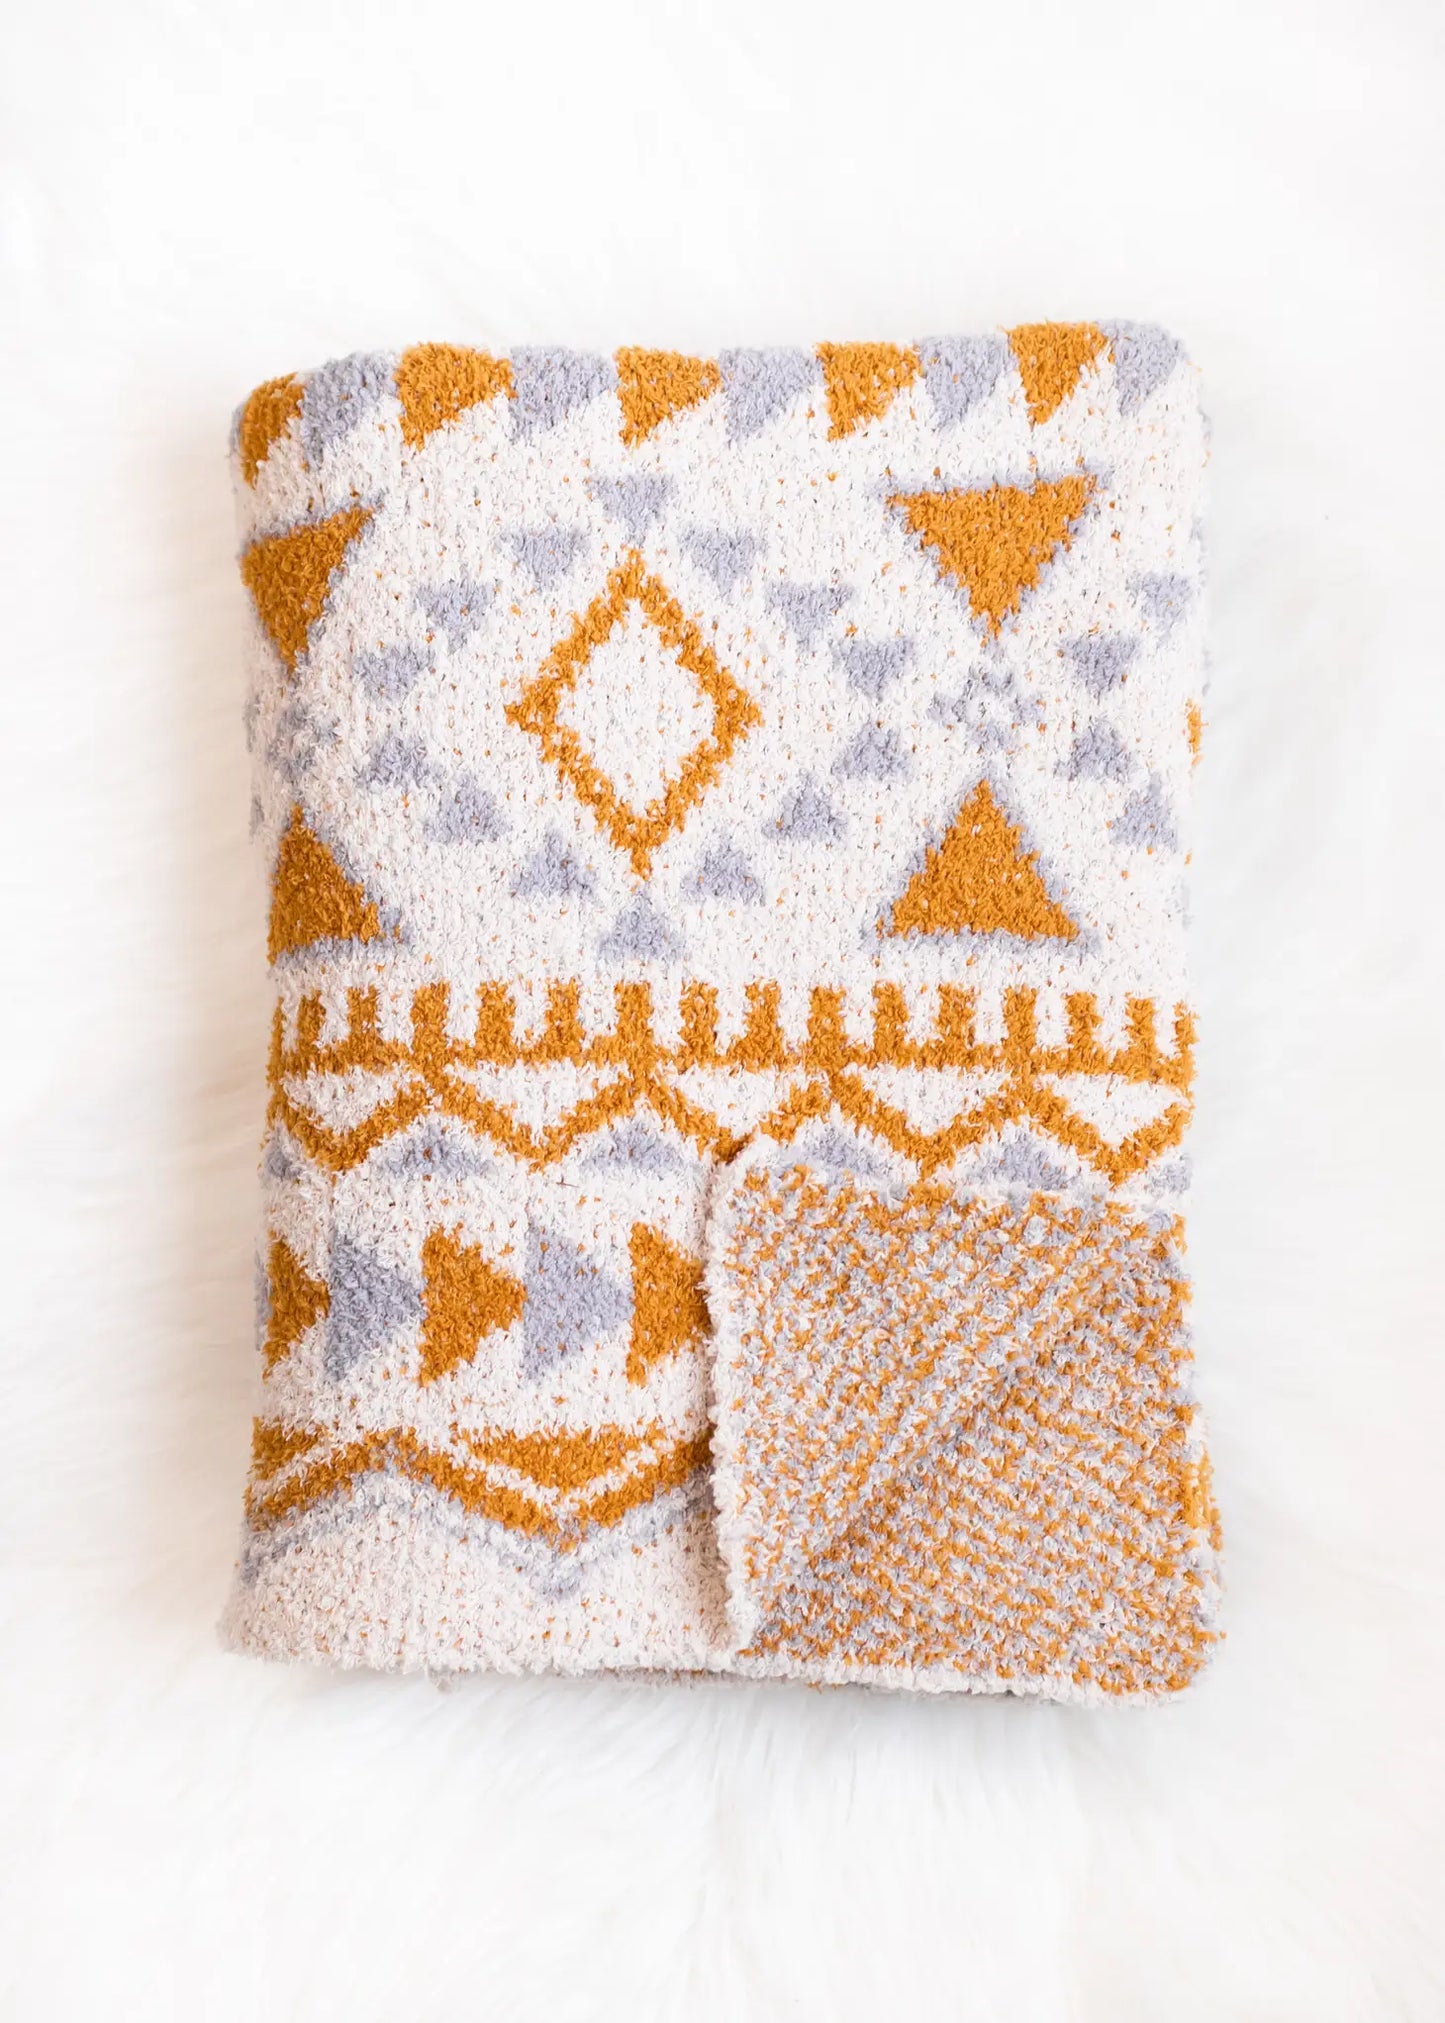 Aztec Inspired Blanket - Orange, Light Grey, & Cream